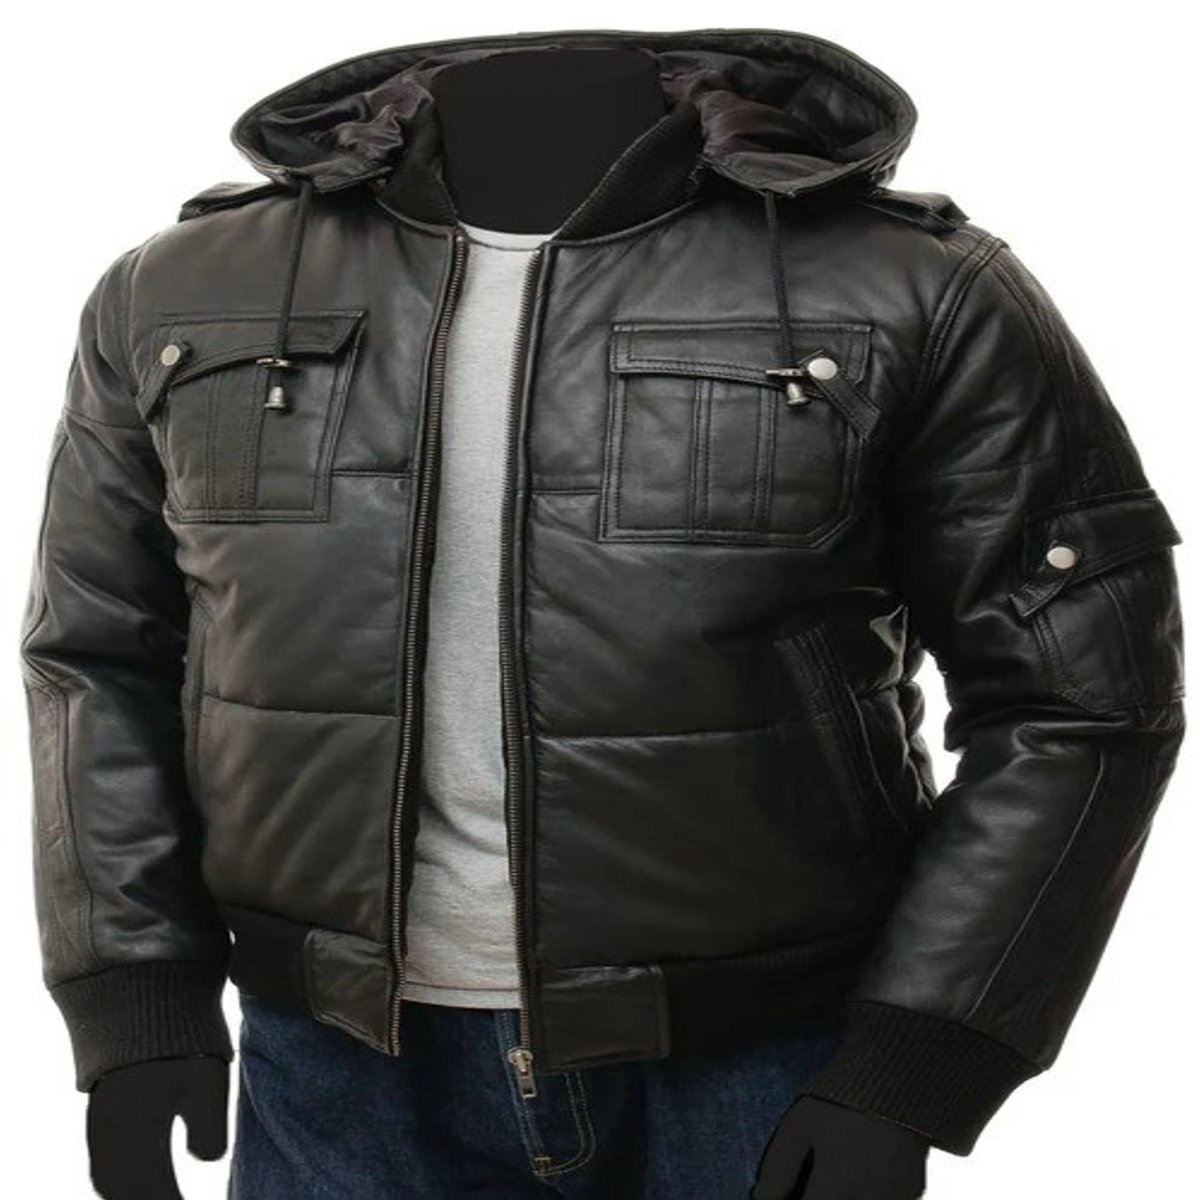 Versatile Style: Men's Black Hooded Bomber Leather Jacket 
chillgoodsuk.com/products/jorde…
#MensFashion #LeatherJacket #HoodedJacket
#BomberJacket #BlackLeather #LambskinLeather
#RemovableHood #VersatileStyle #FashionEssential
#StreetStyle #UrbanFashion #ClassicLook